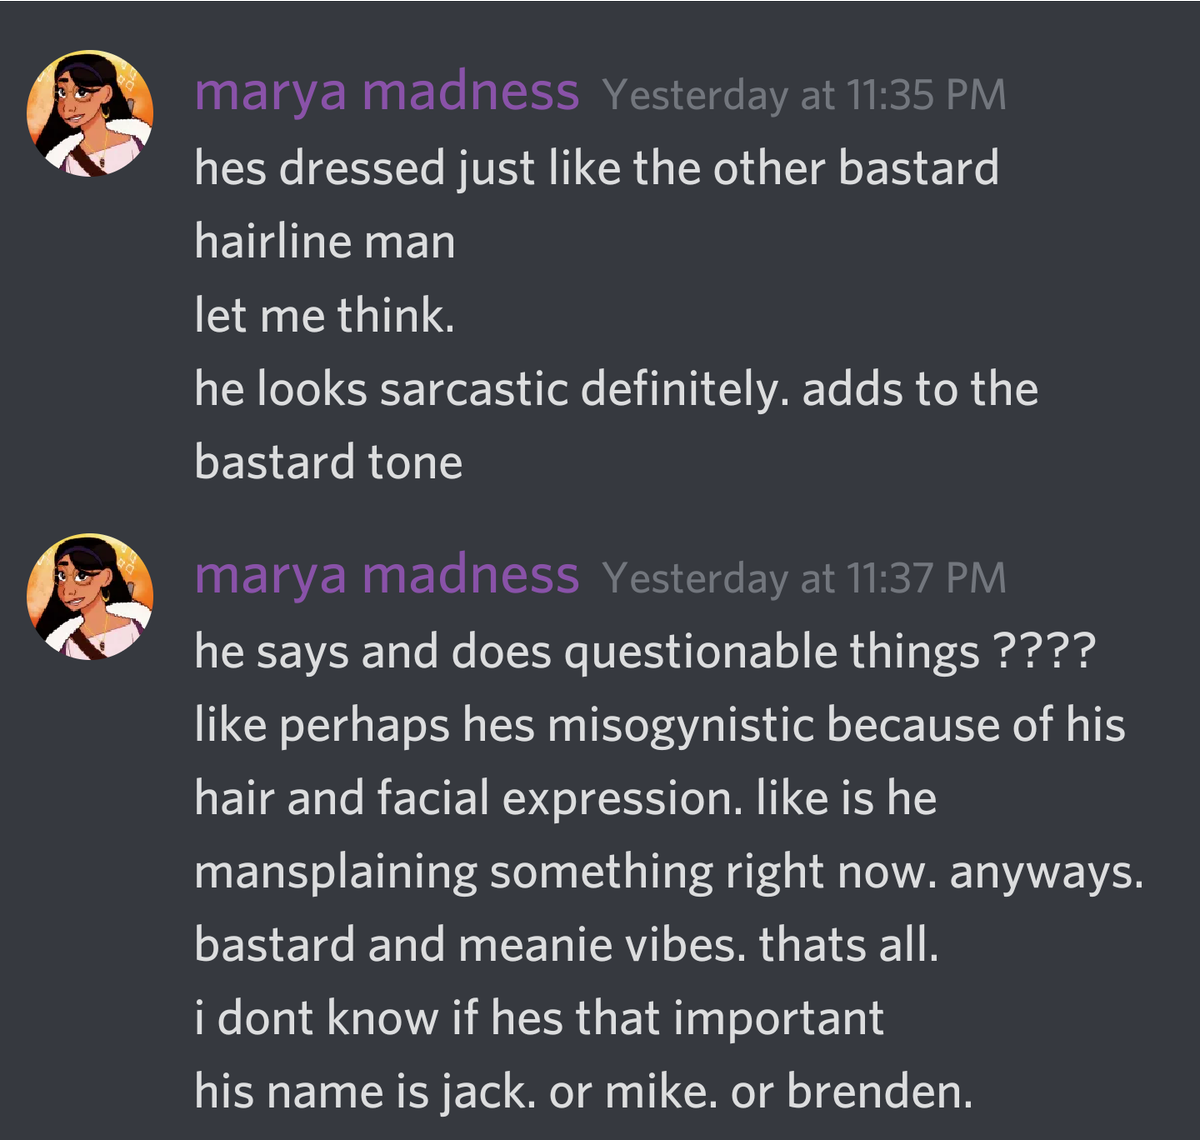 "other bastard hairline man" = rip